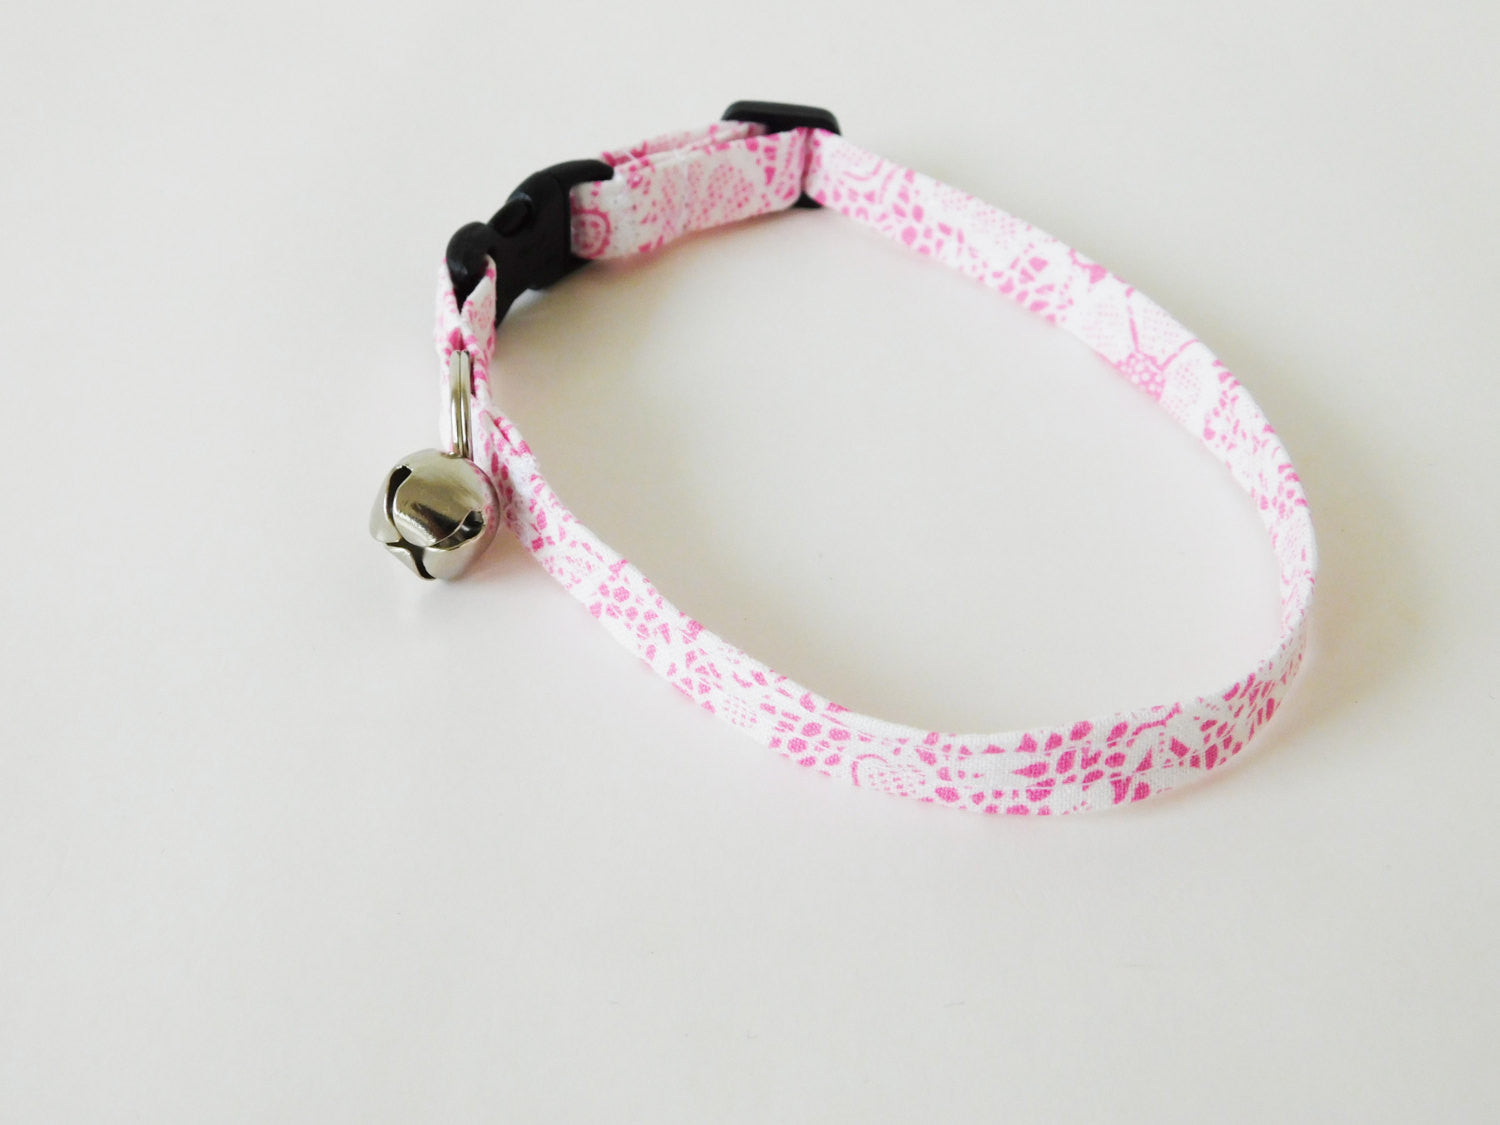 Pink Faux Lace Collar - Charlotte's Pet